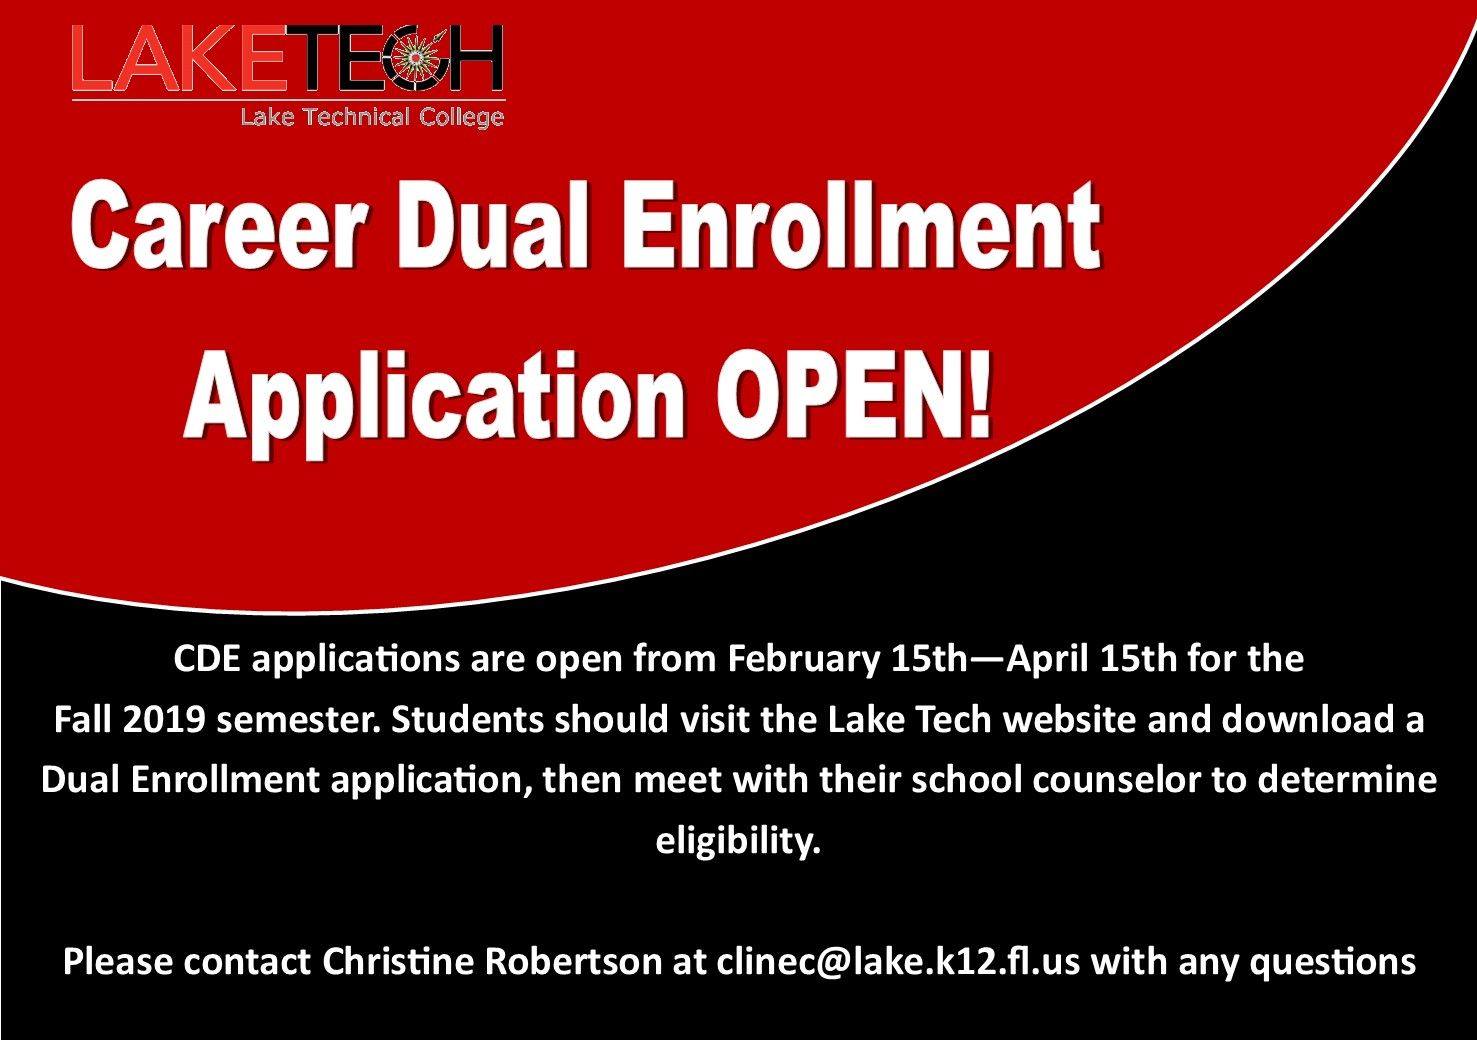 career dual enrollment Student Affairs 02/22/19